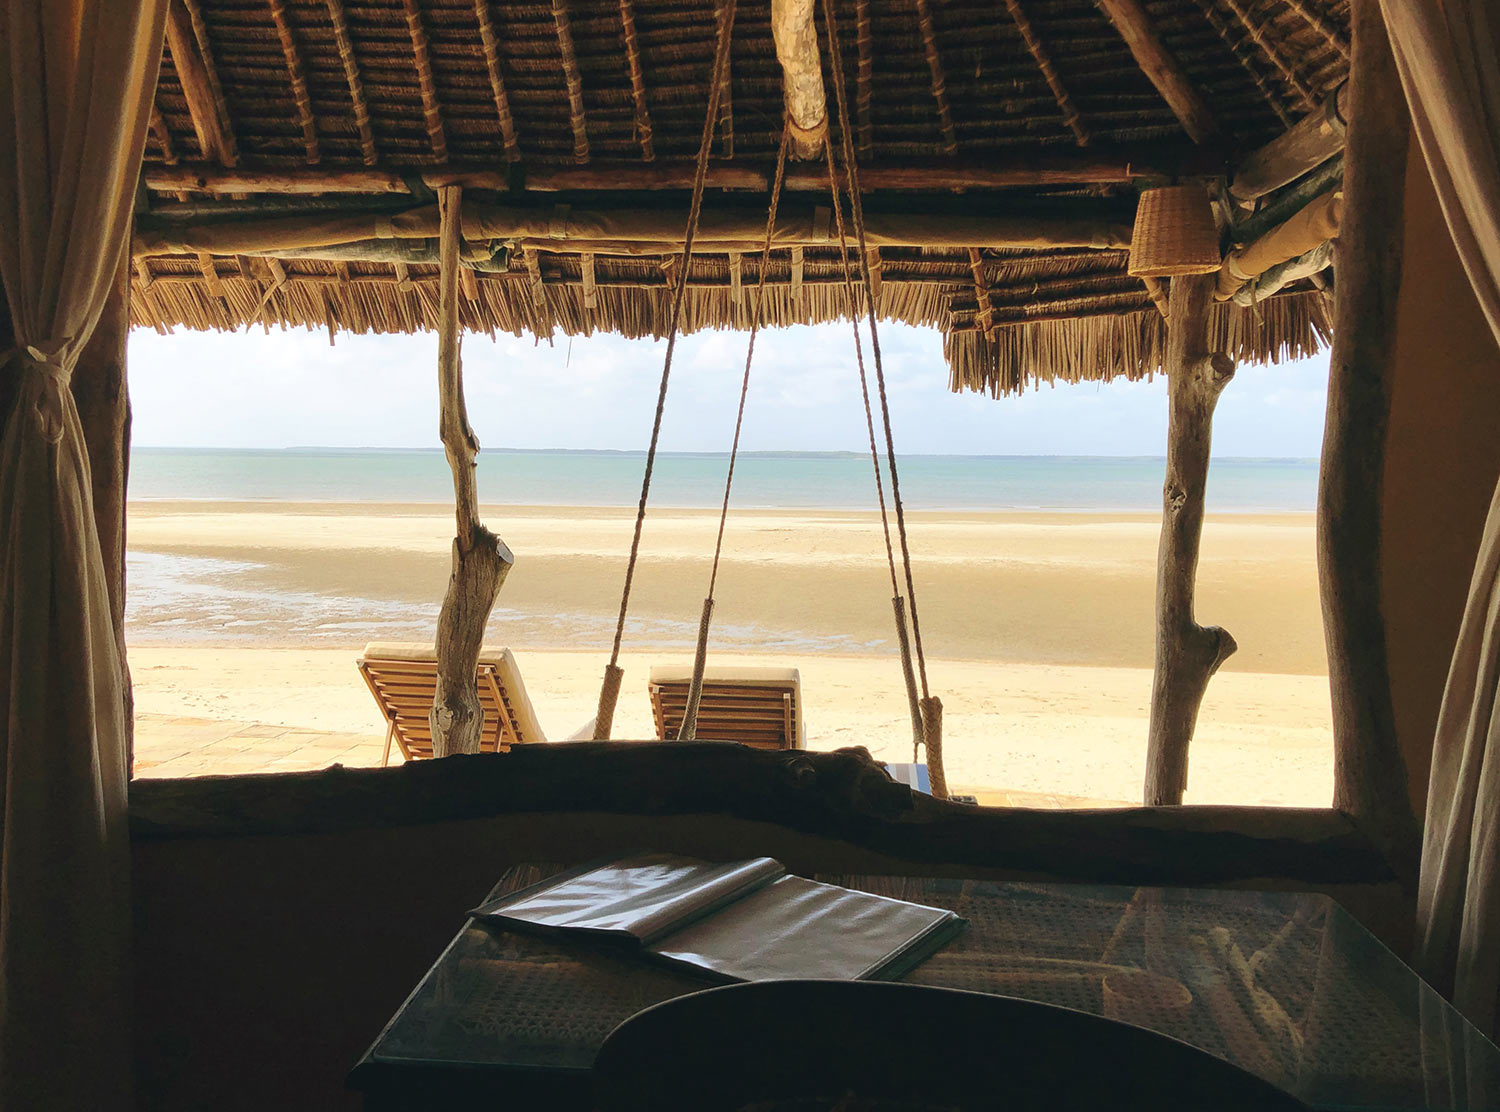 Manda Bay Resort The perfect desk to work and gaze at the beautiful beach